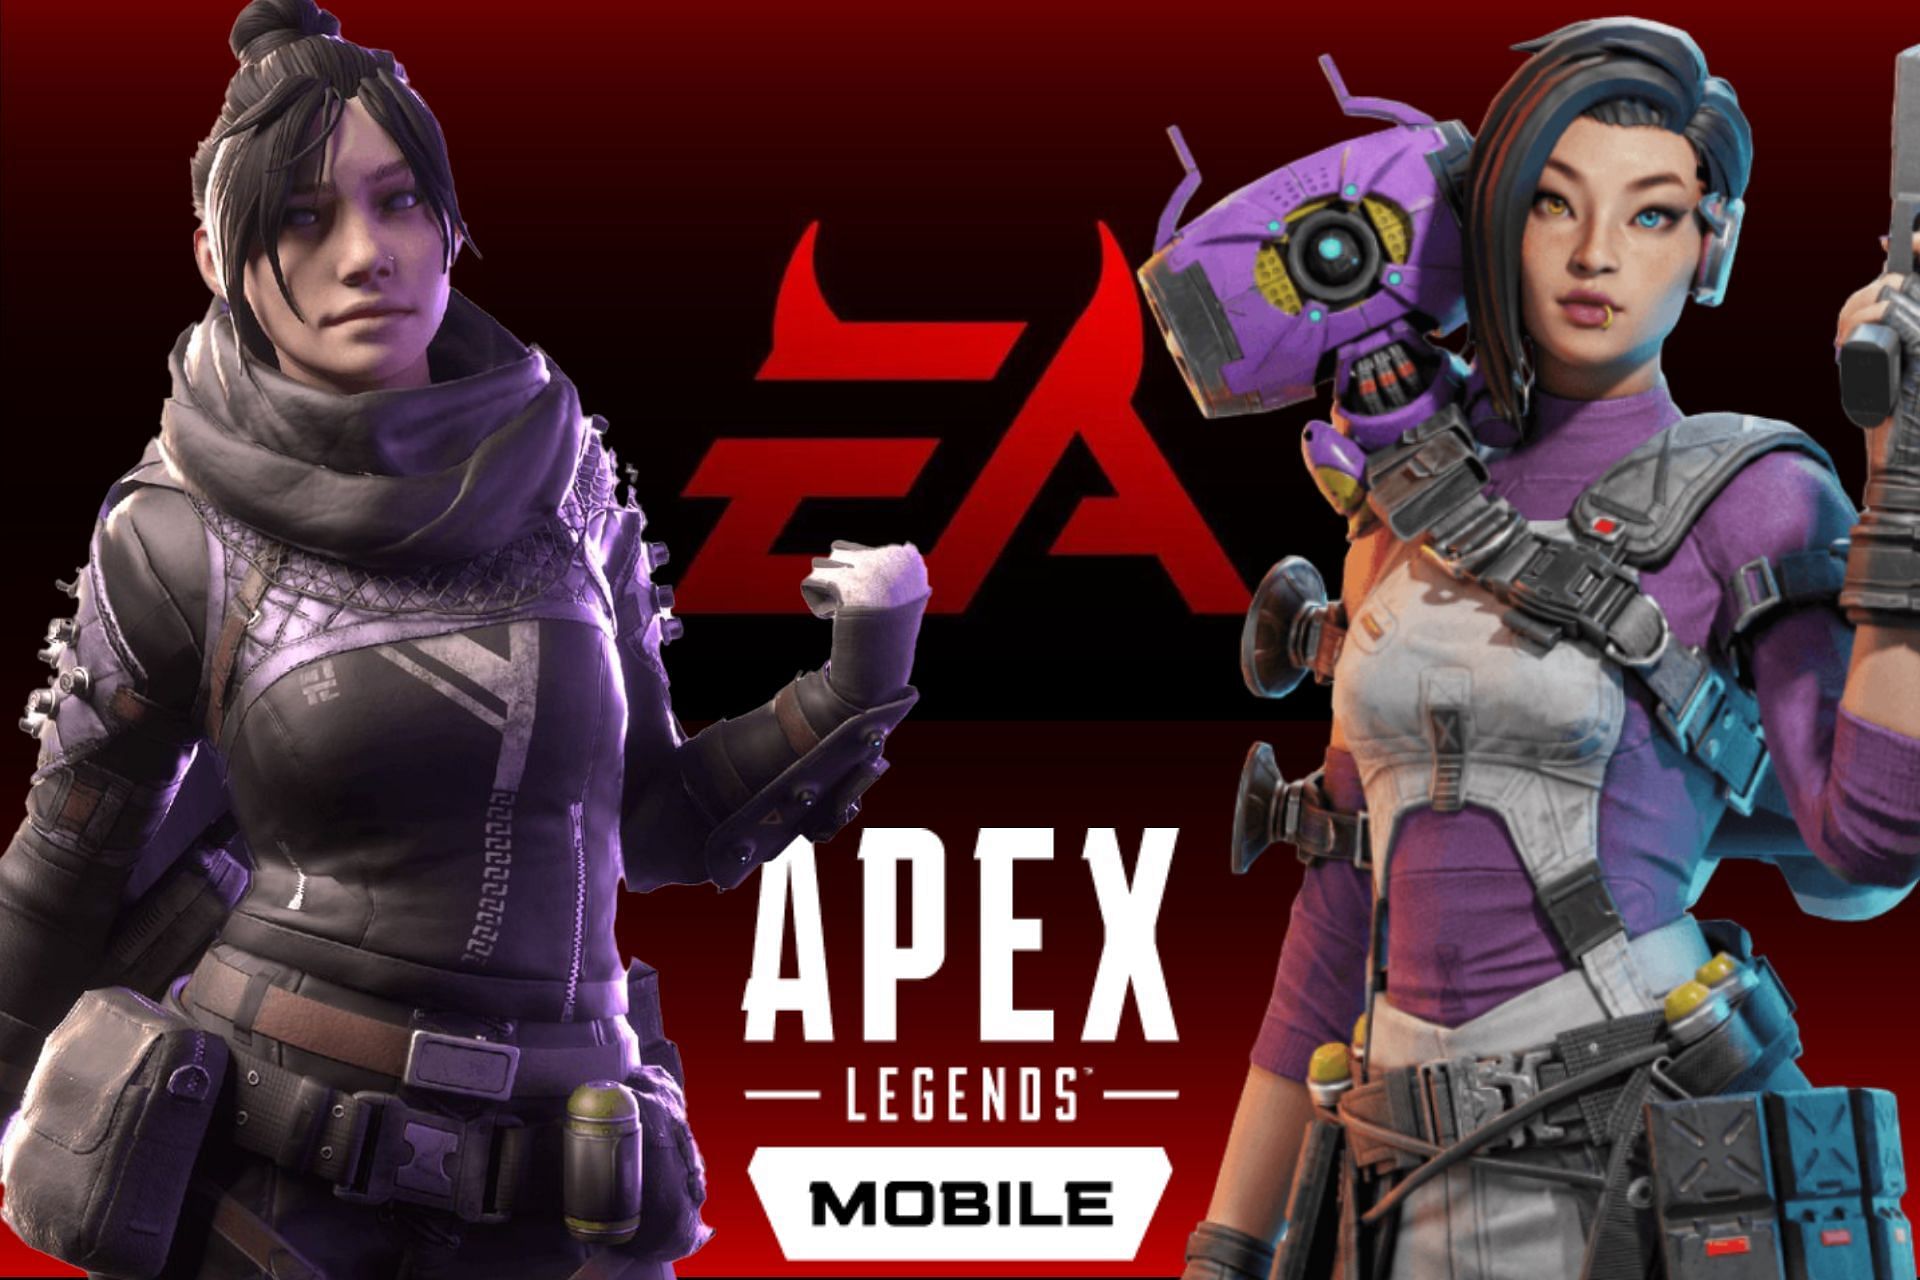 Why Apex Legends Mobile got shut down despite being EA's sixth